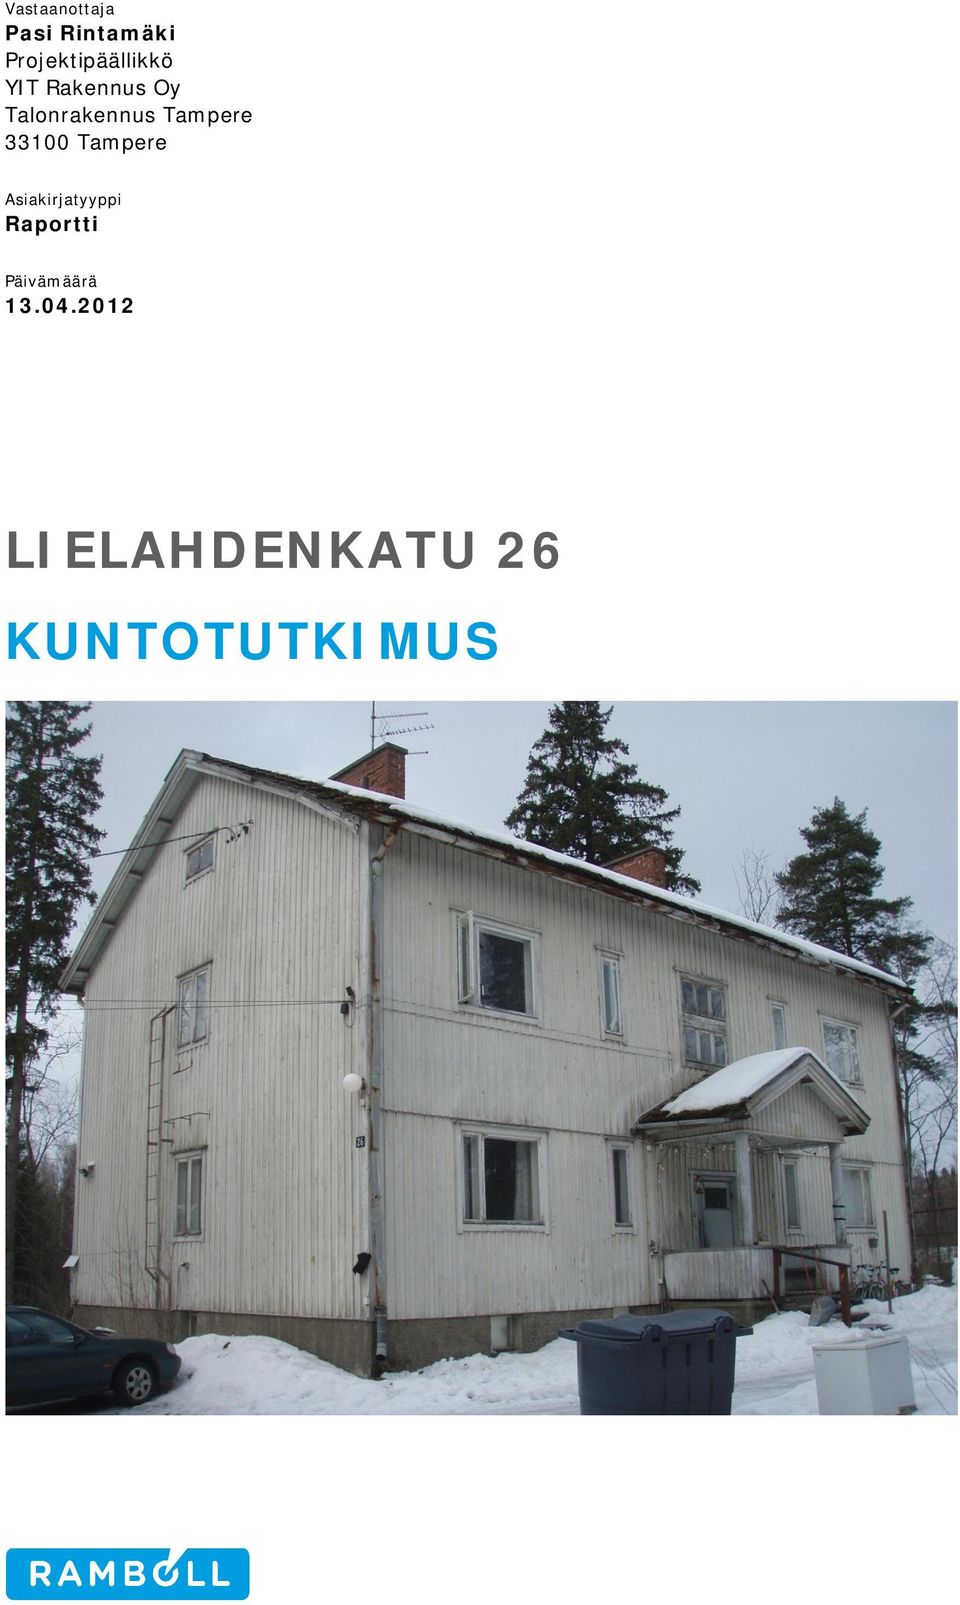 Talonrakennus Tampere 33100 Tampere